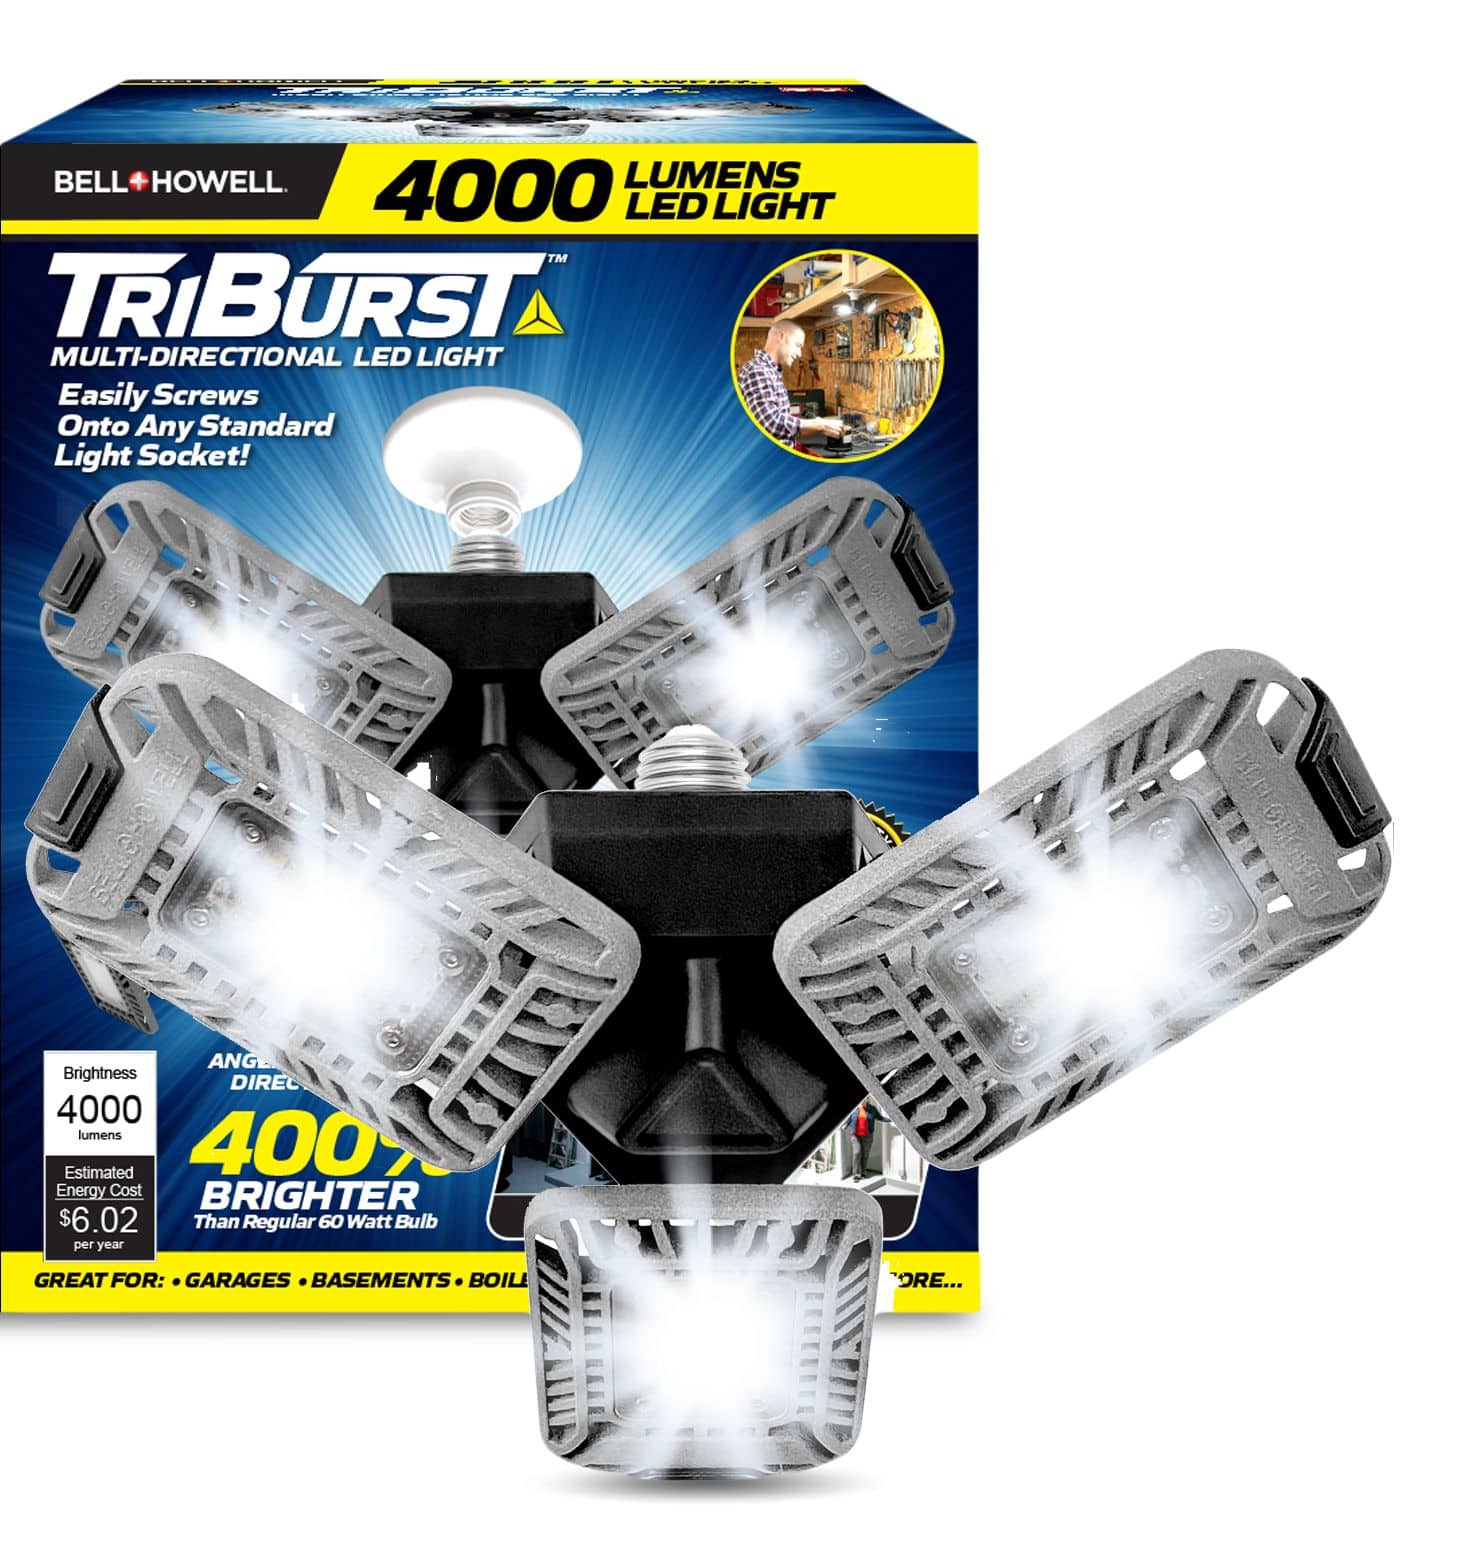 As Seen On TV Triburst Multi-Directional LED Light Canadian Tire